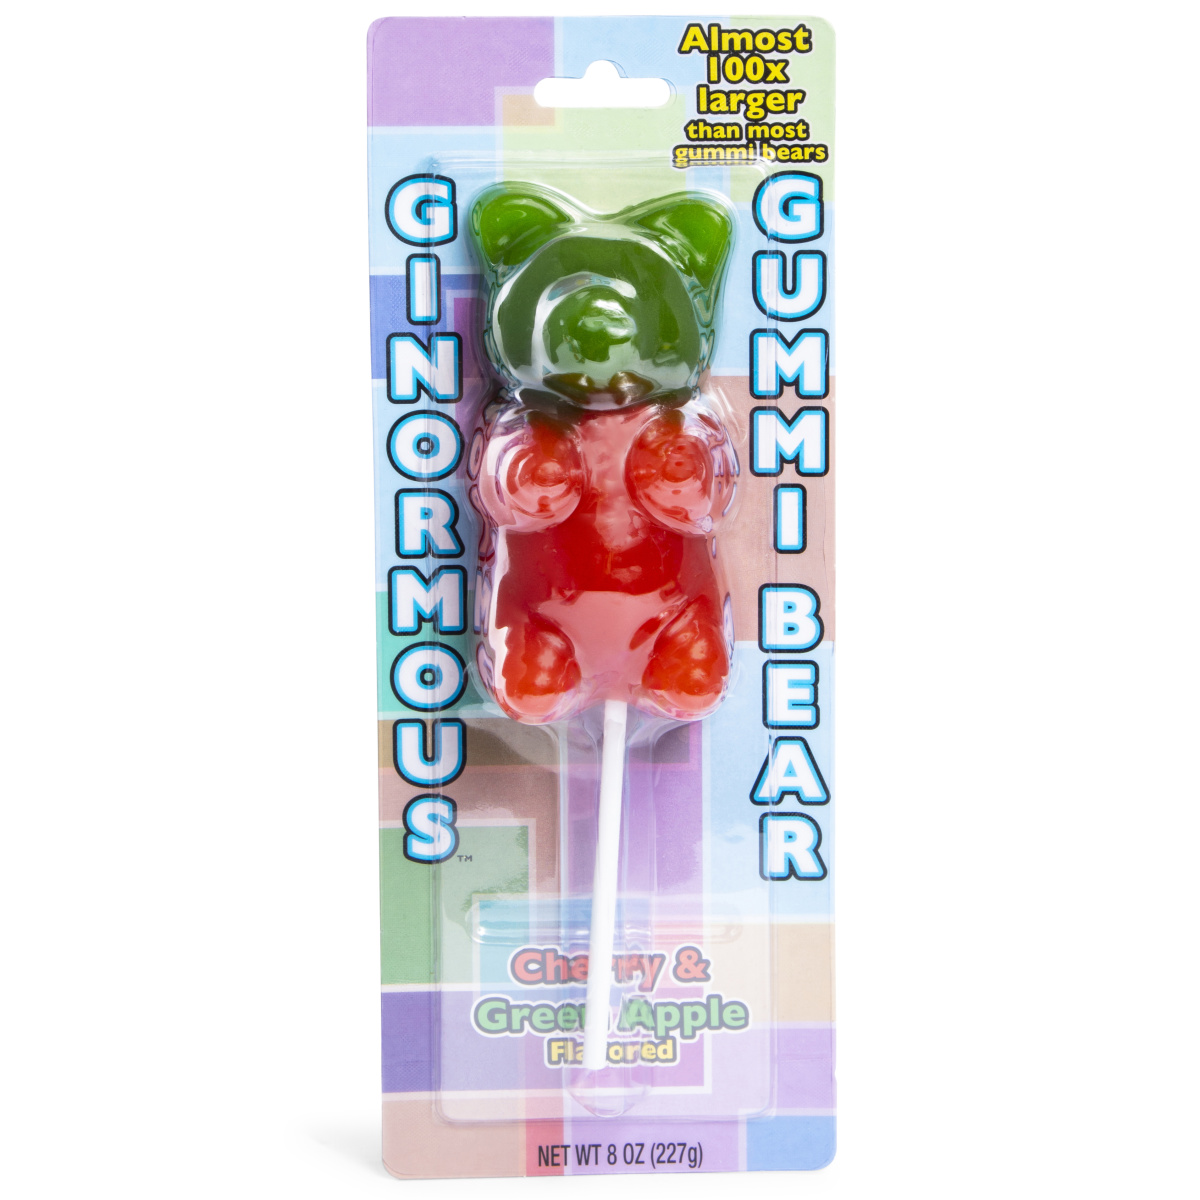 giant gummy worm vs giant gummy bear